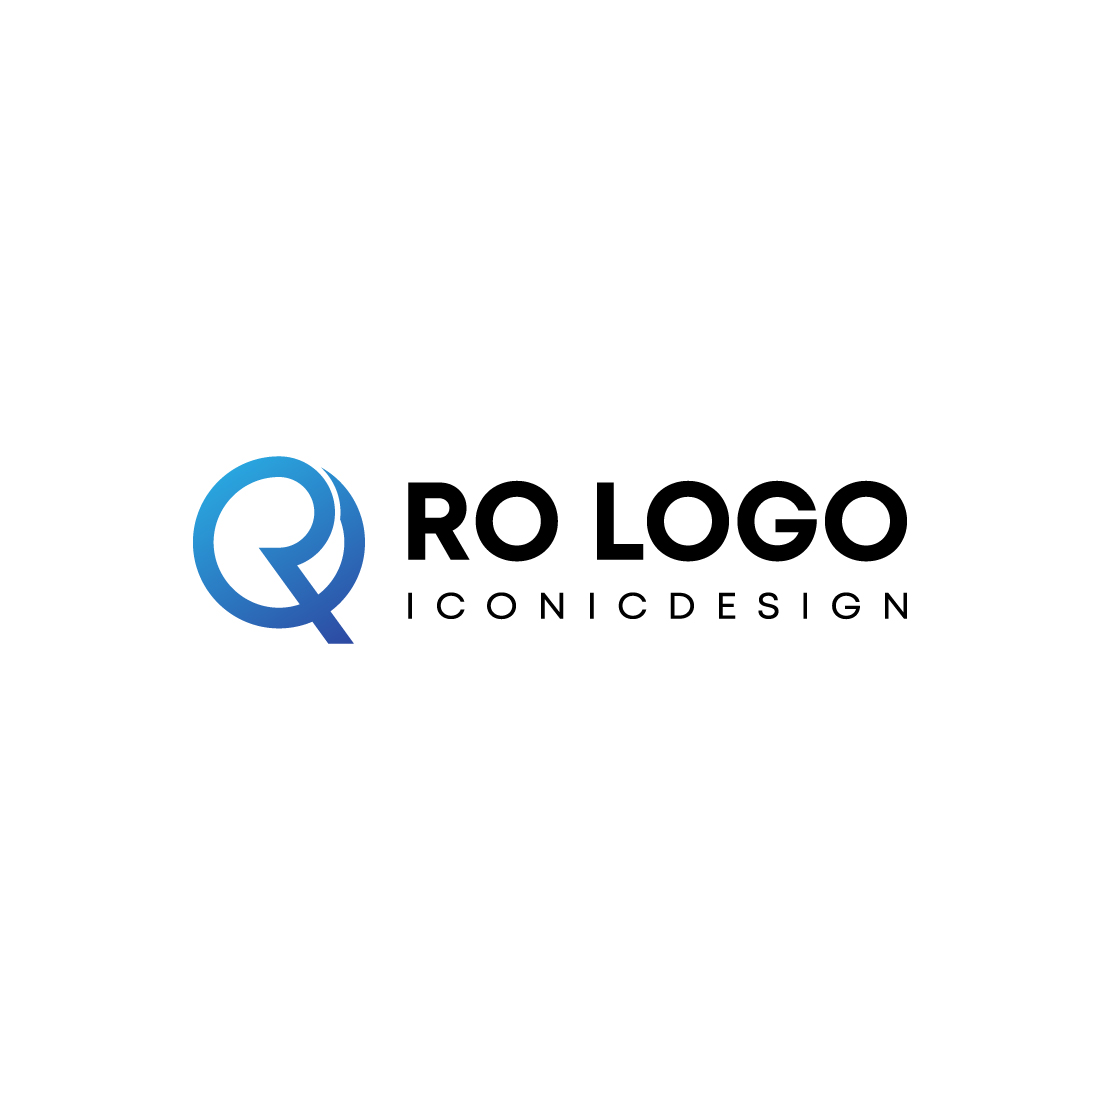 RO logo cover image.